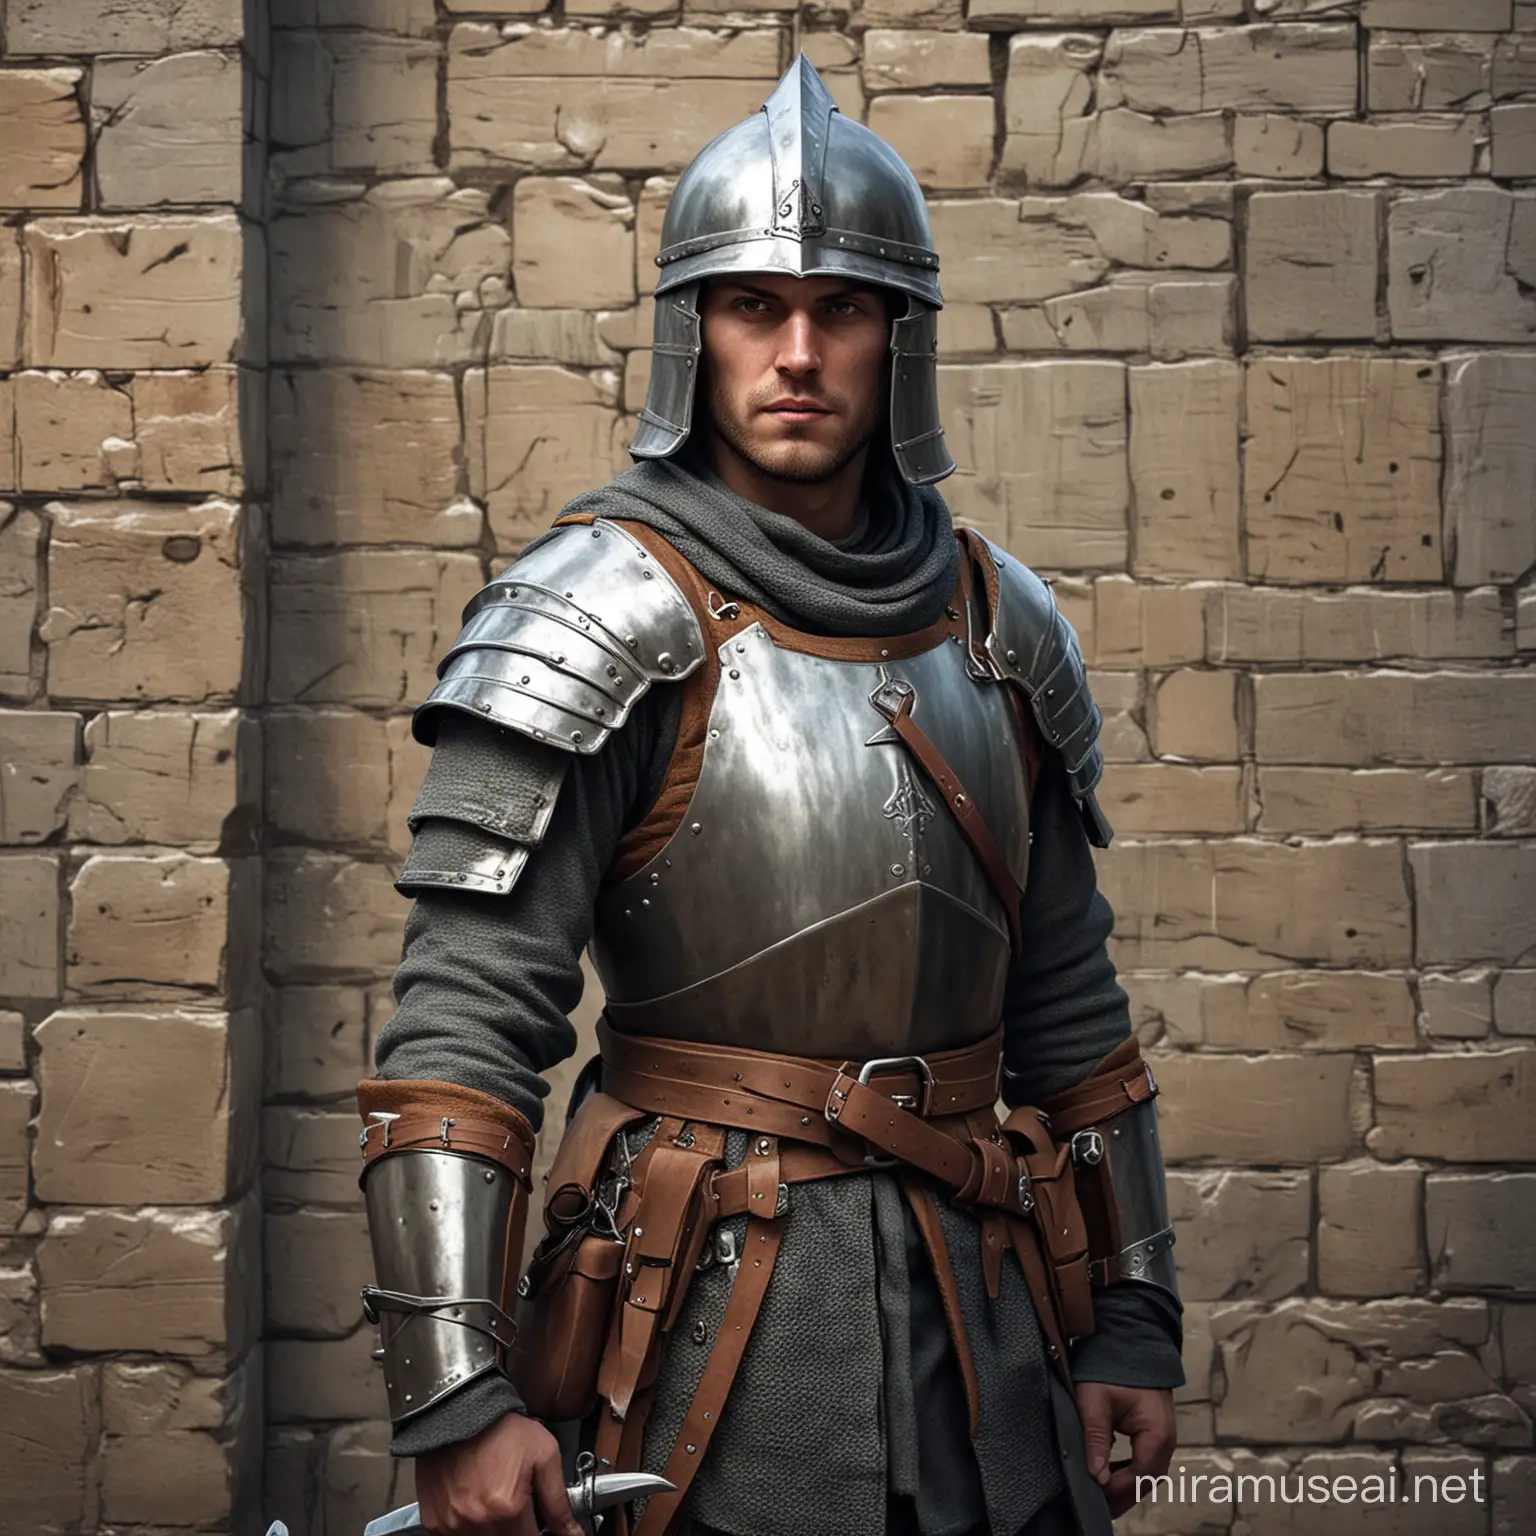 dnd medieval prison soldier, wearing a helmet
